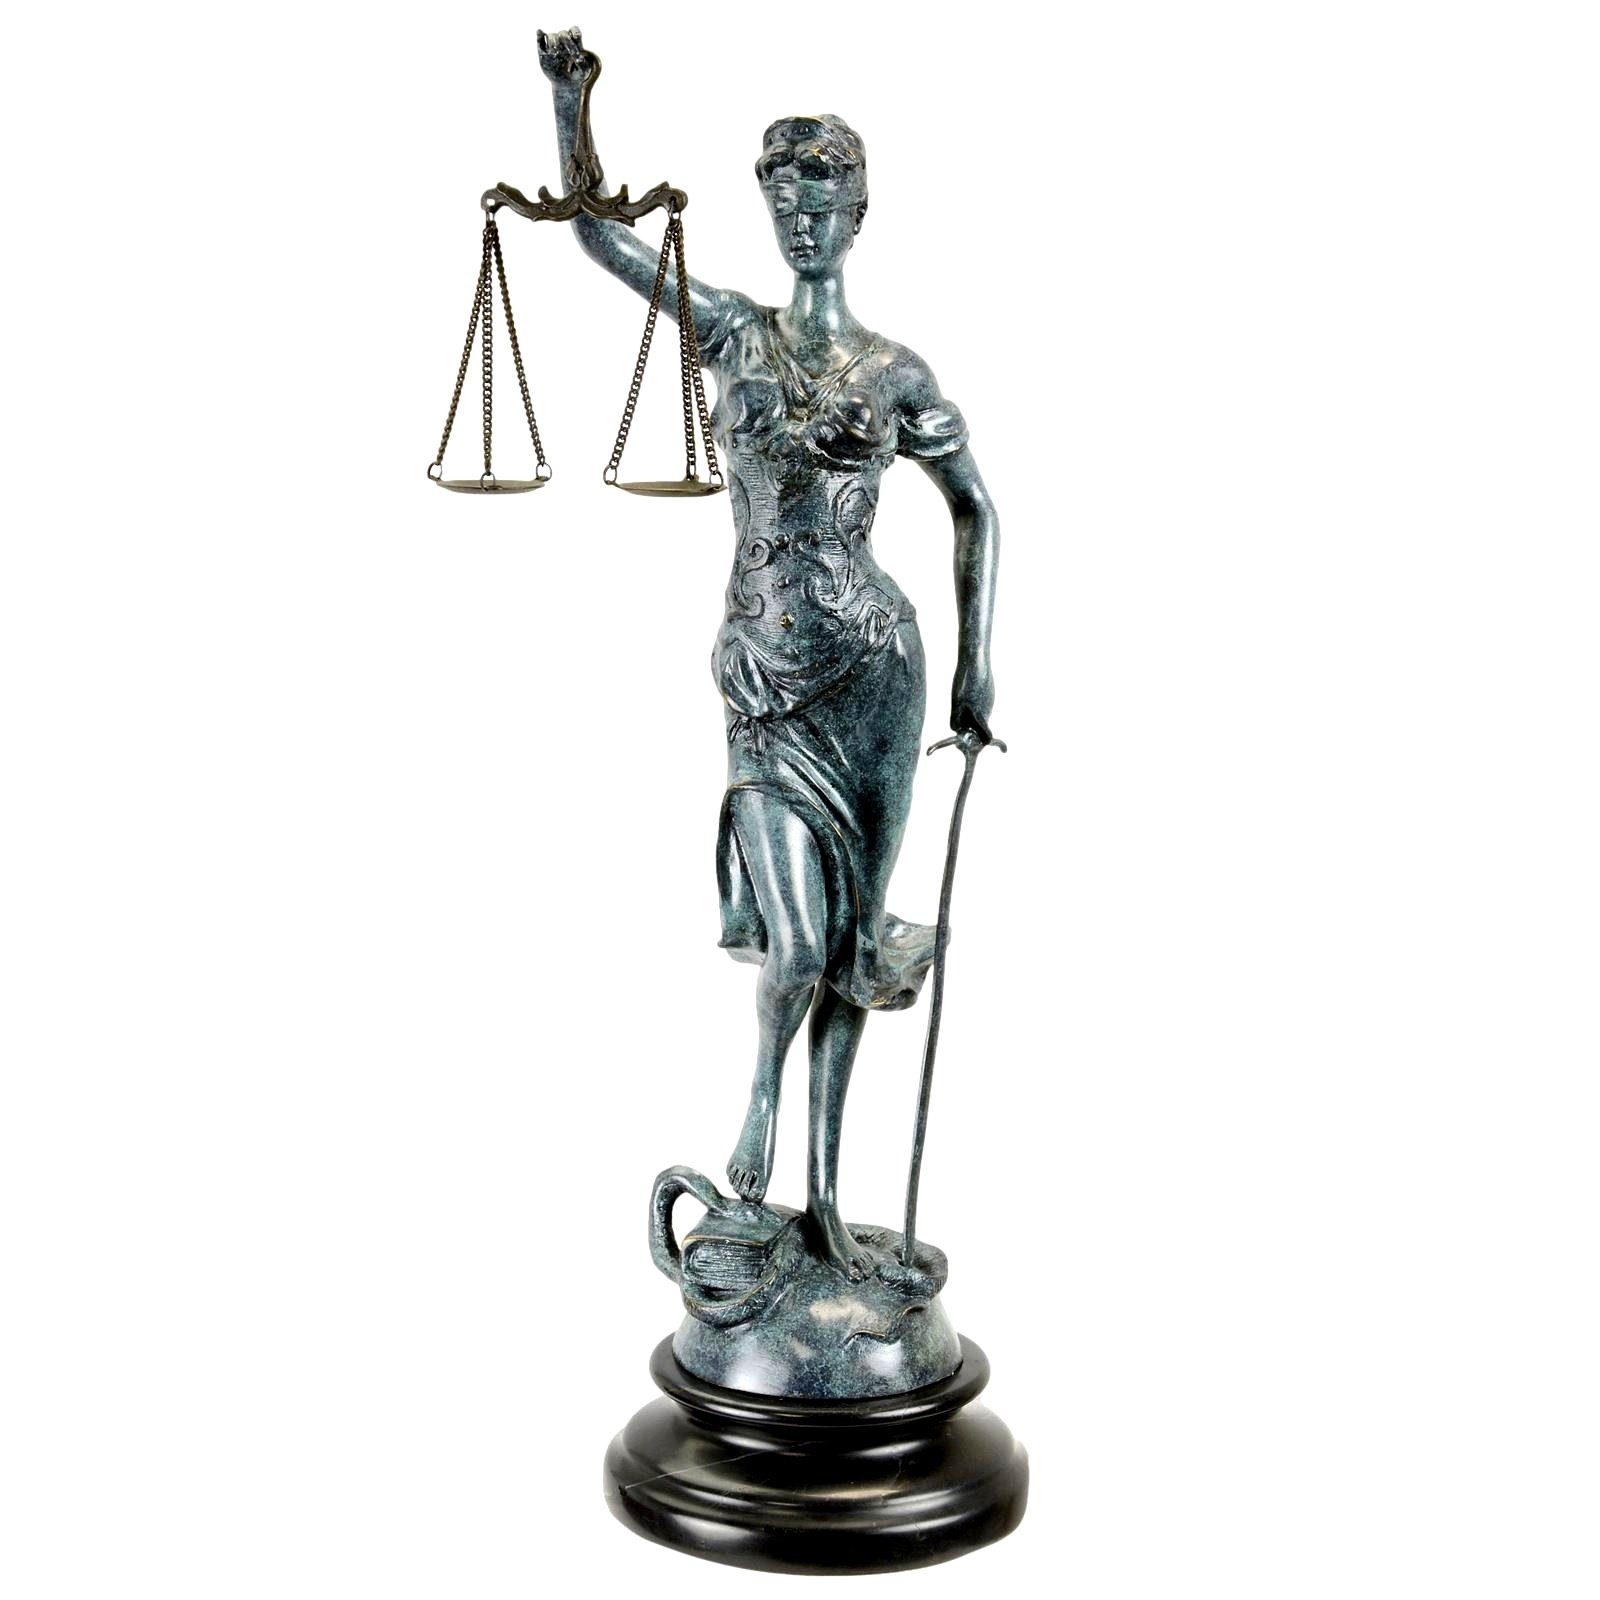 Aubaho Skulptur Bronzefigur Justitia Justizia mit Waage Bronze Skulptur Statue Antik-S